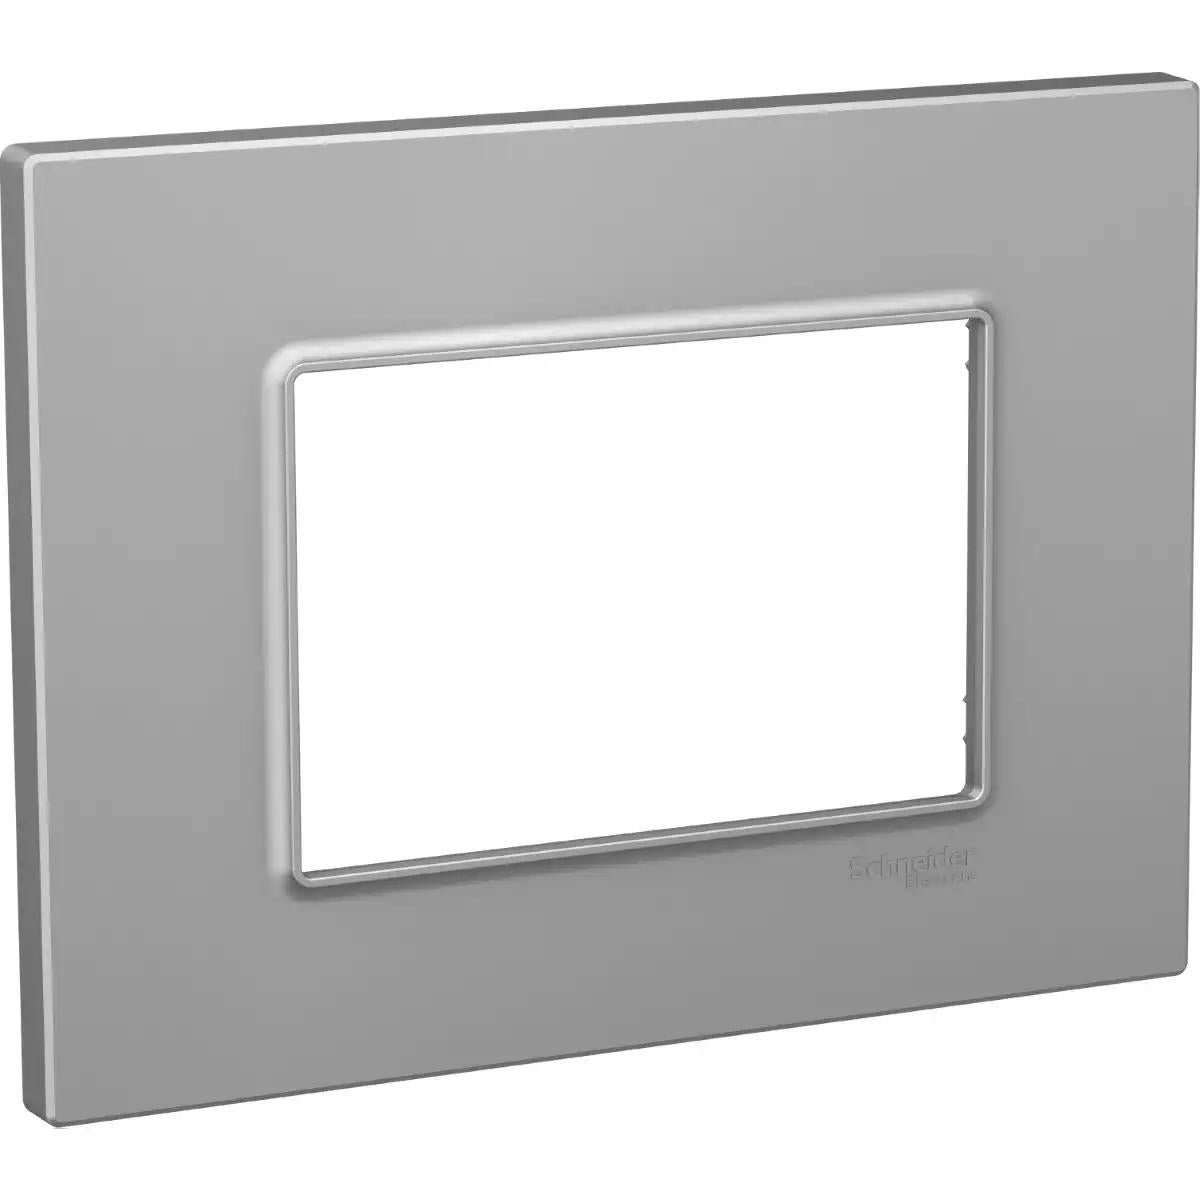 Unica Quadro - cover frame - 3 modules - silver